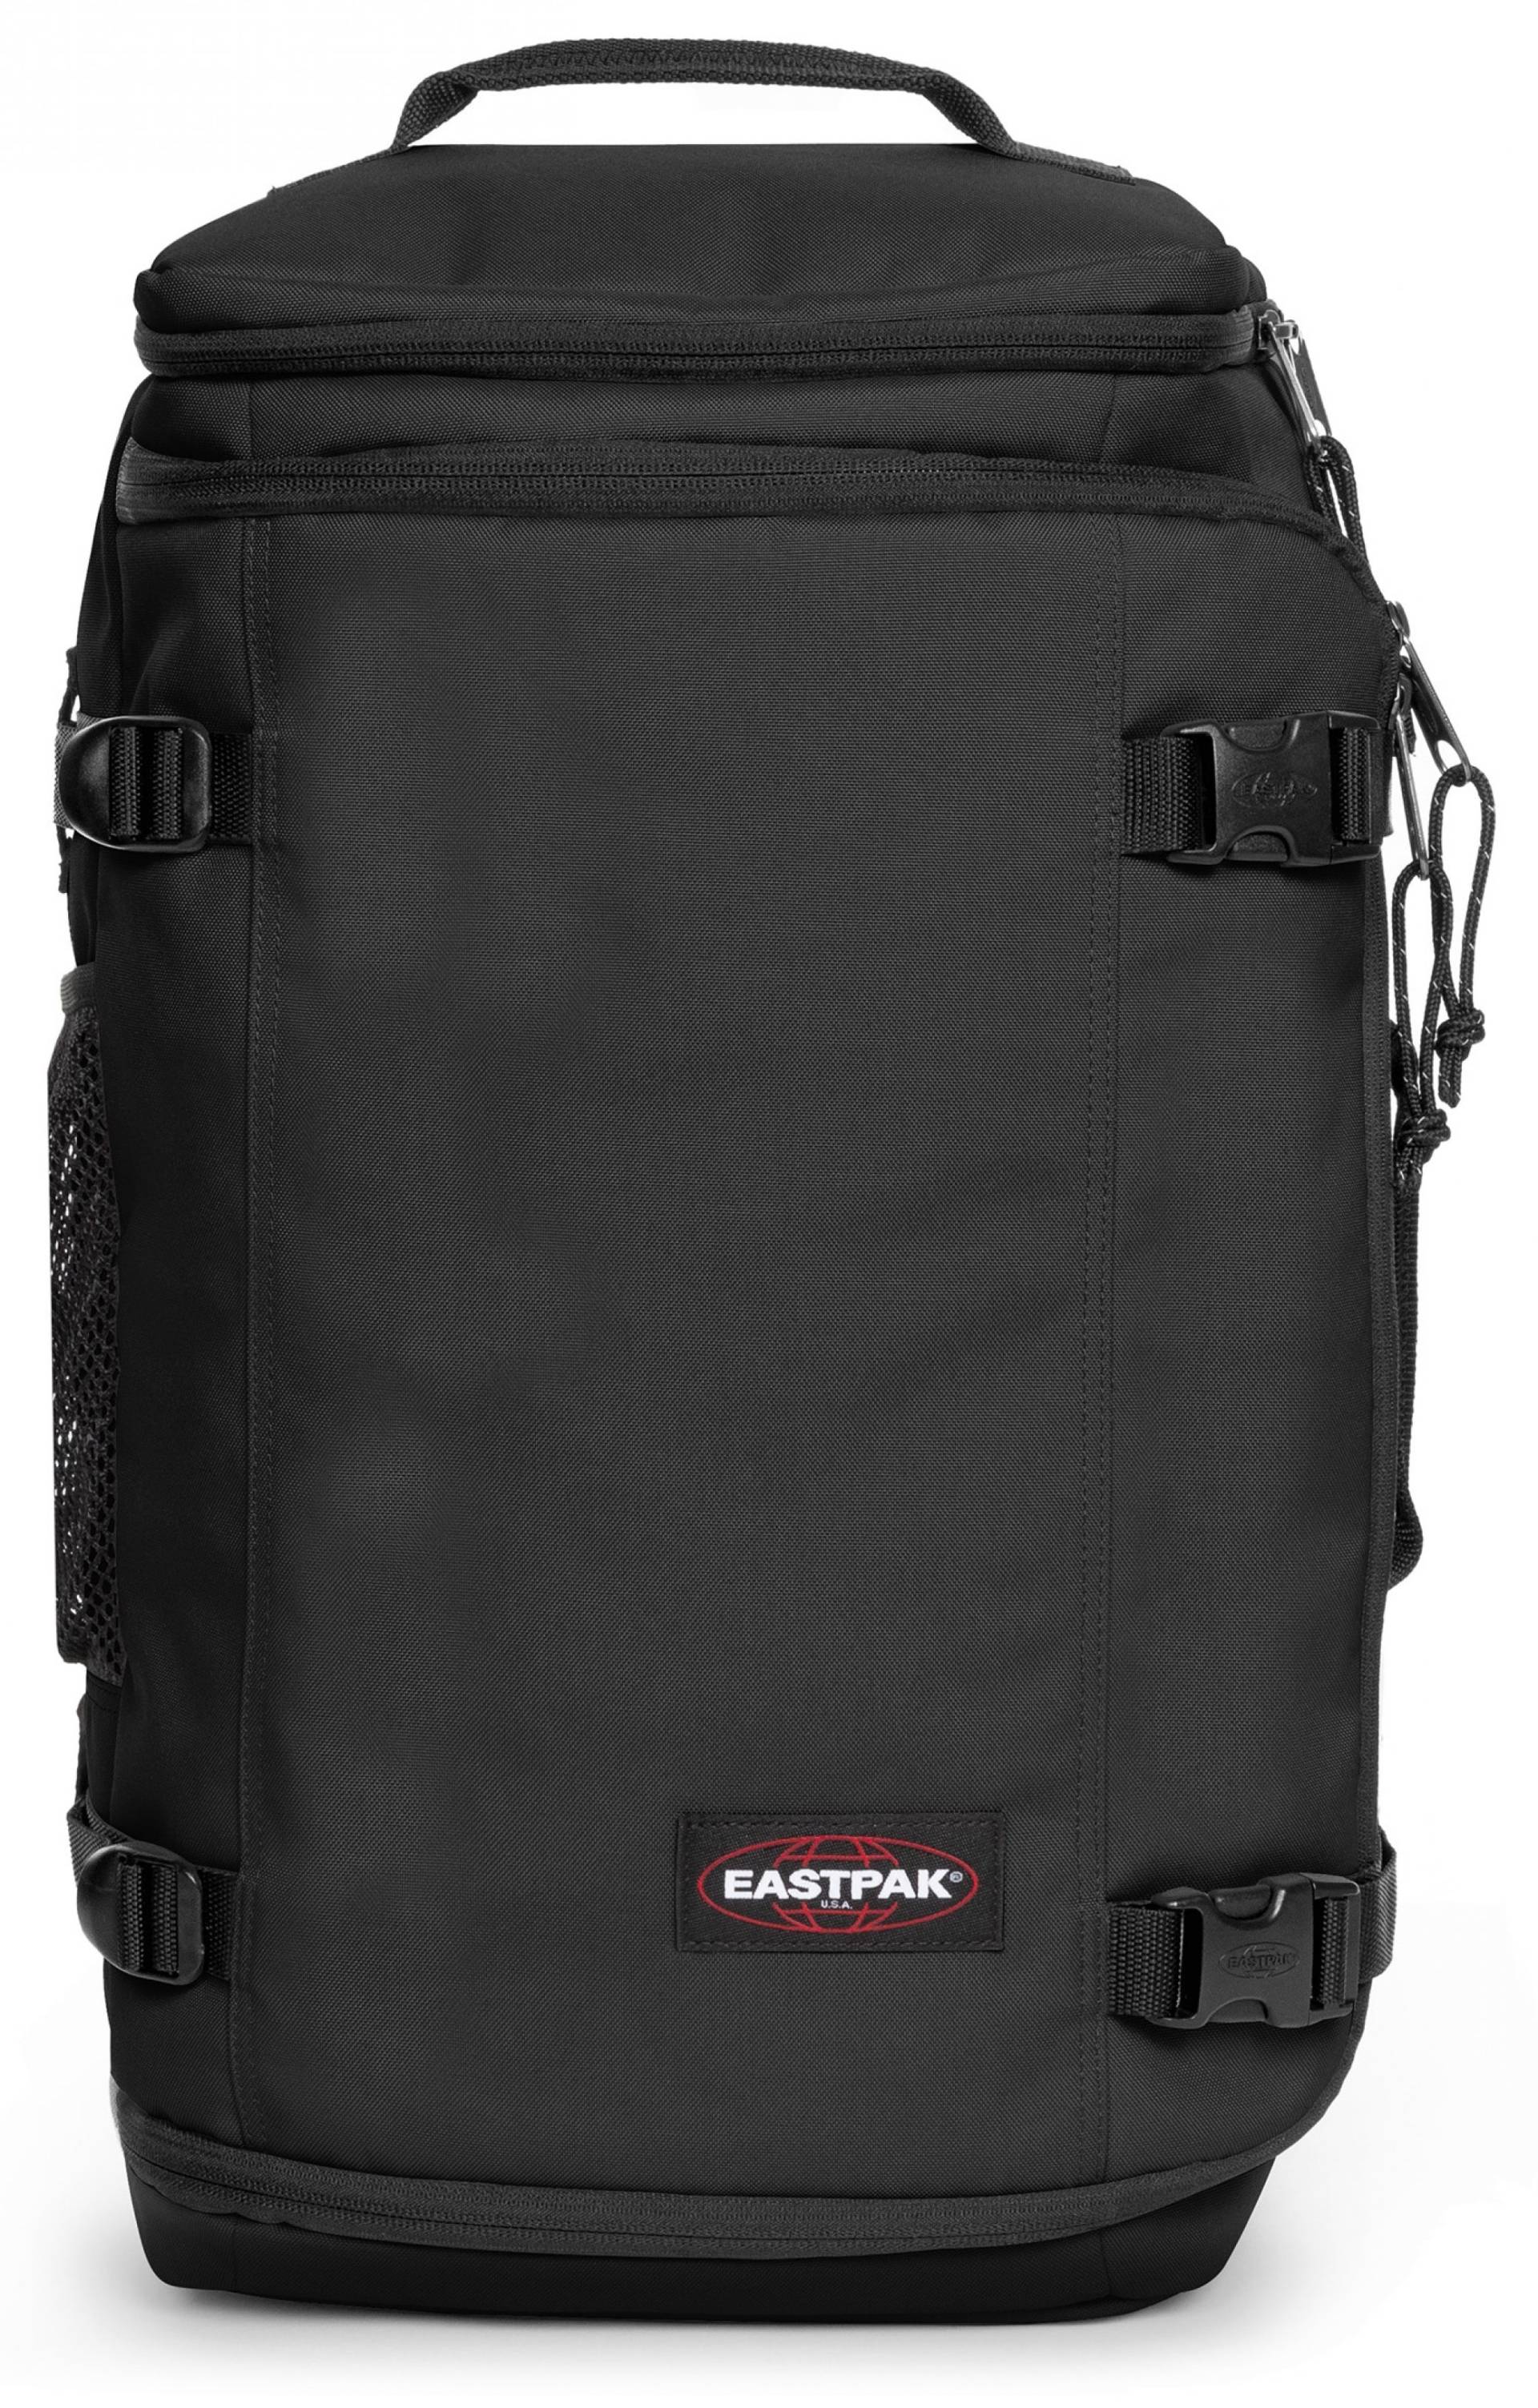 Eastpak Freizeitrucksack "CARRY PACK", Sportrucksack Wanderrucksack Streetpack von Eastpak